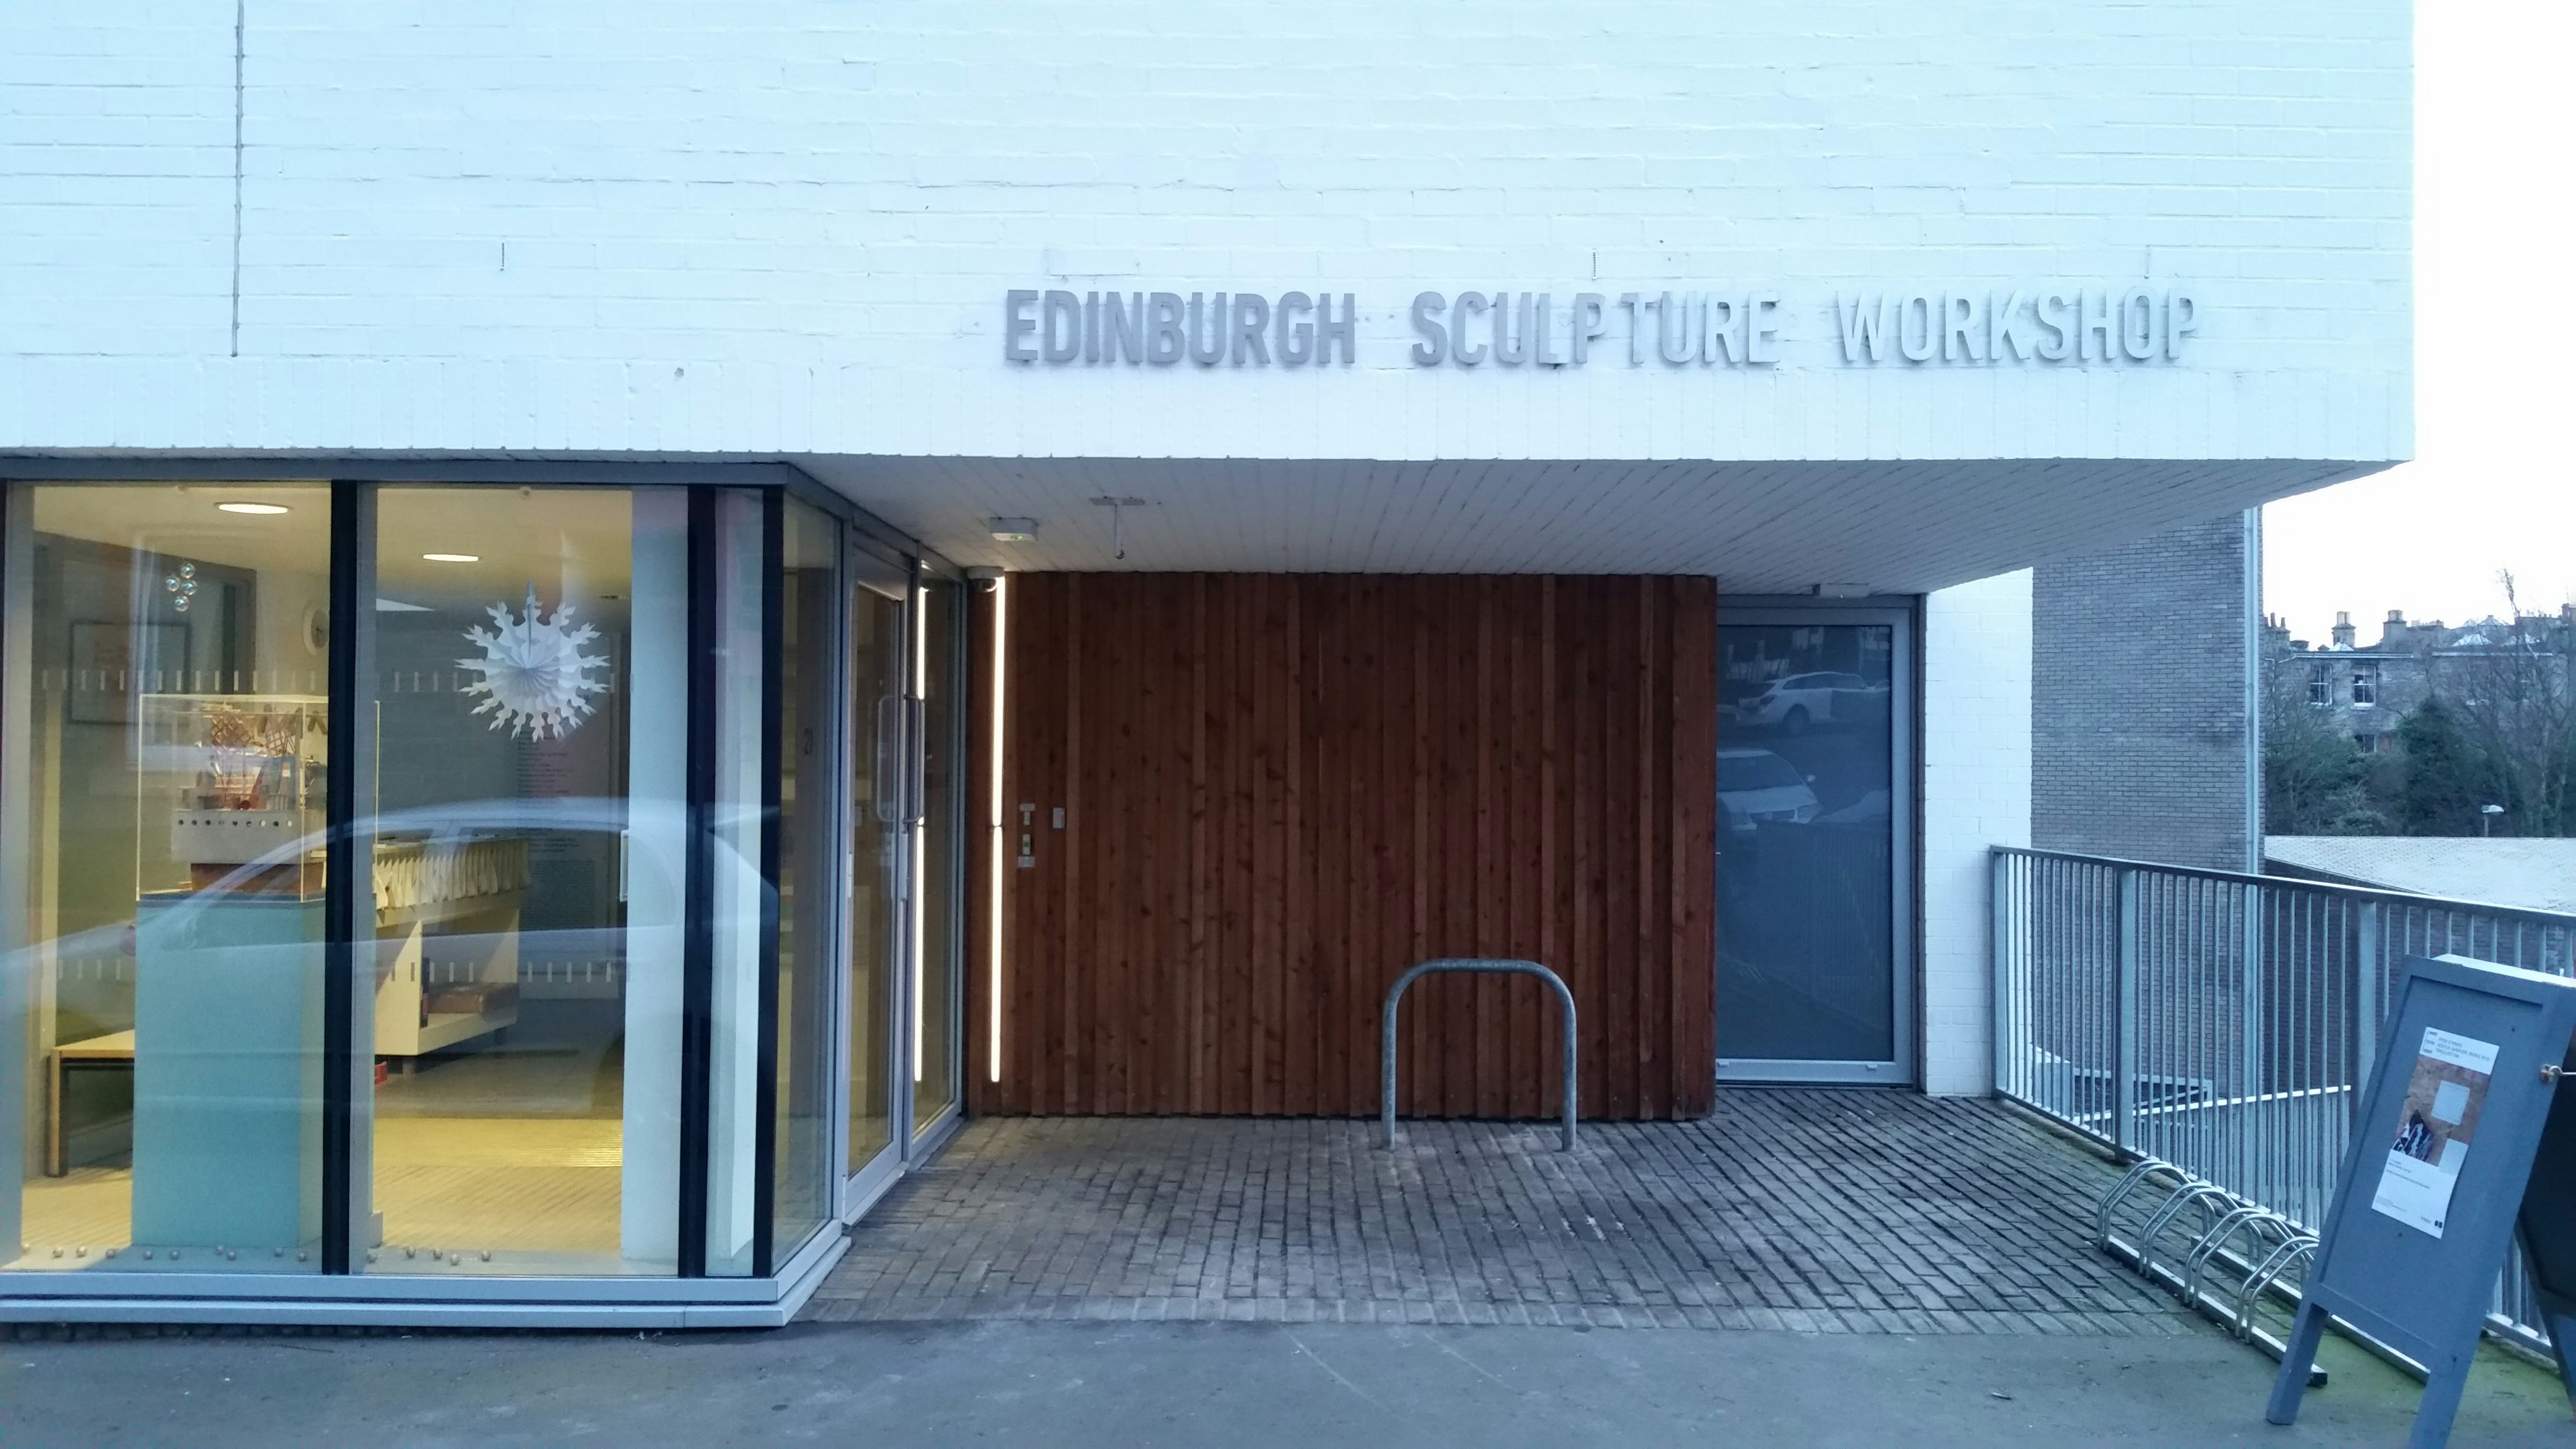 Outside the entrance to Edinburgh Sculpture Workshop